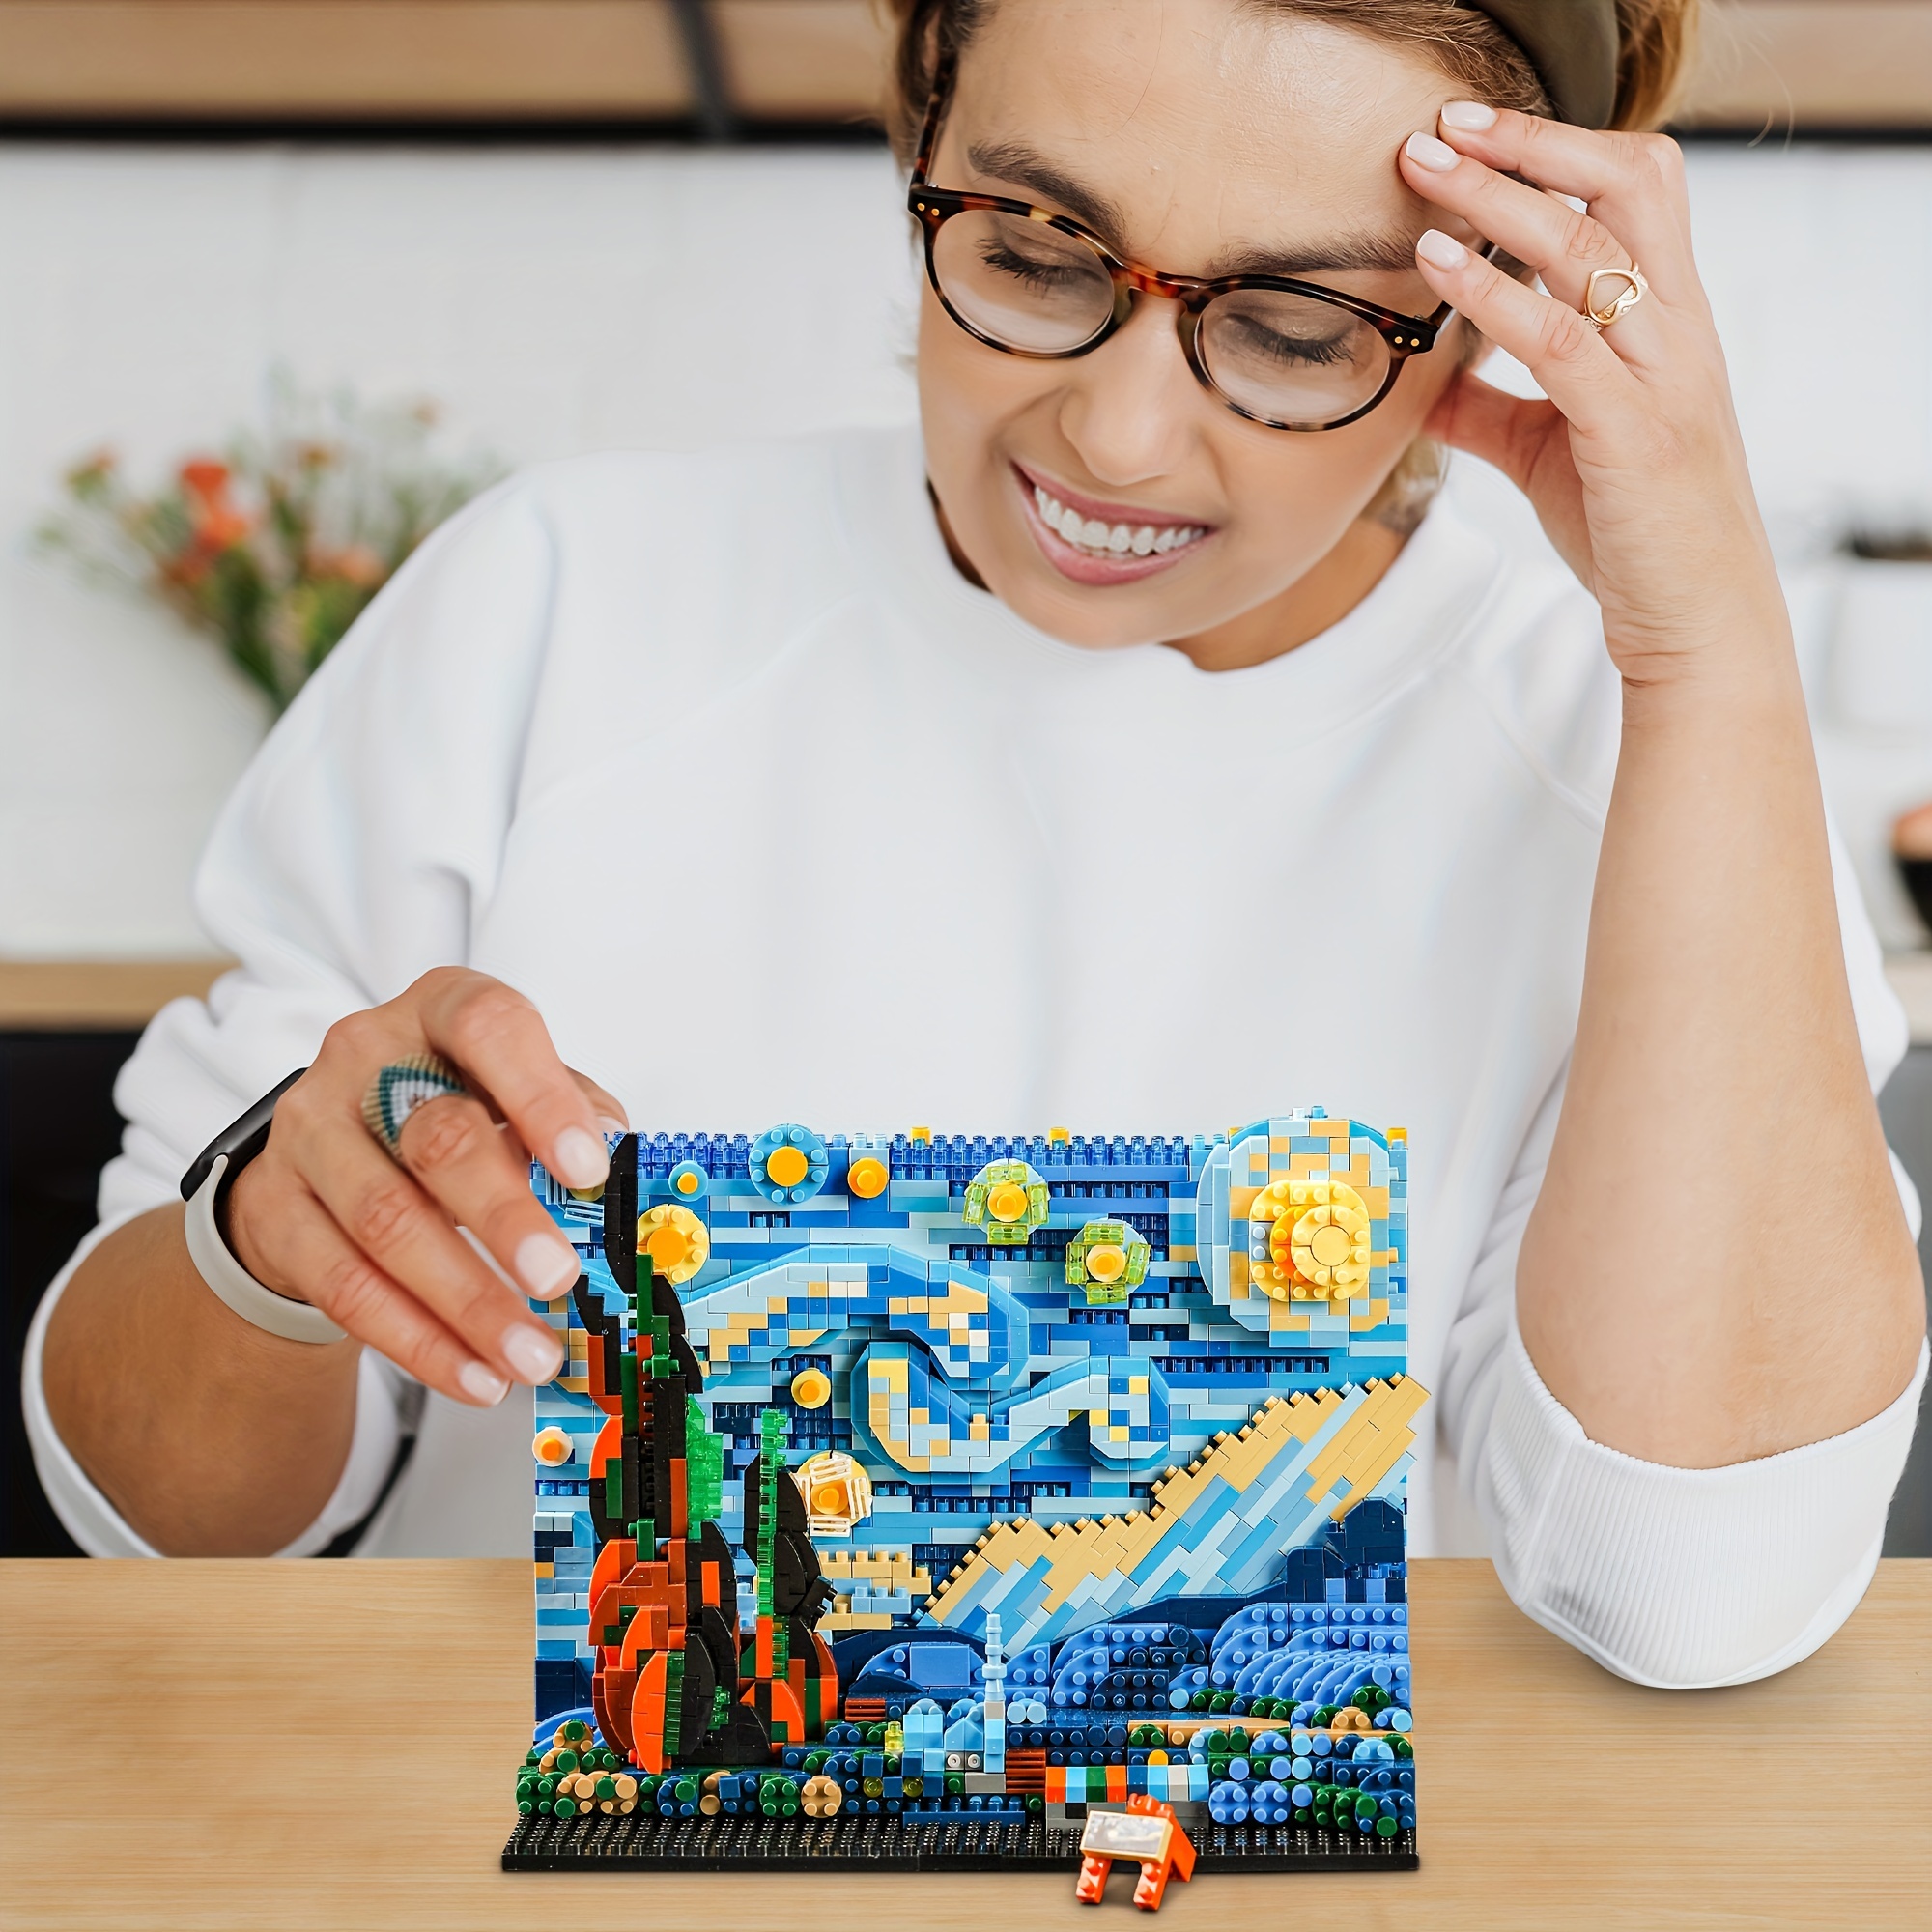  HOGOKIDS The Starry Night Building Kit - Vincent Van Gogh Micro  Building Blocks Sets Mini Construction Model DIY Art Projects Home Decor  Display Ideas Painting Set for Adults - 1851PCS 